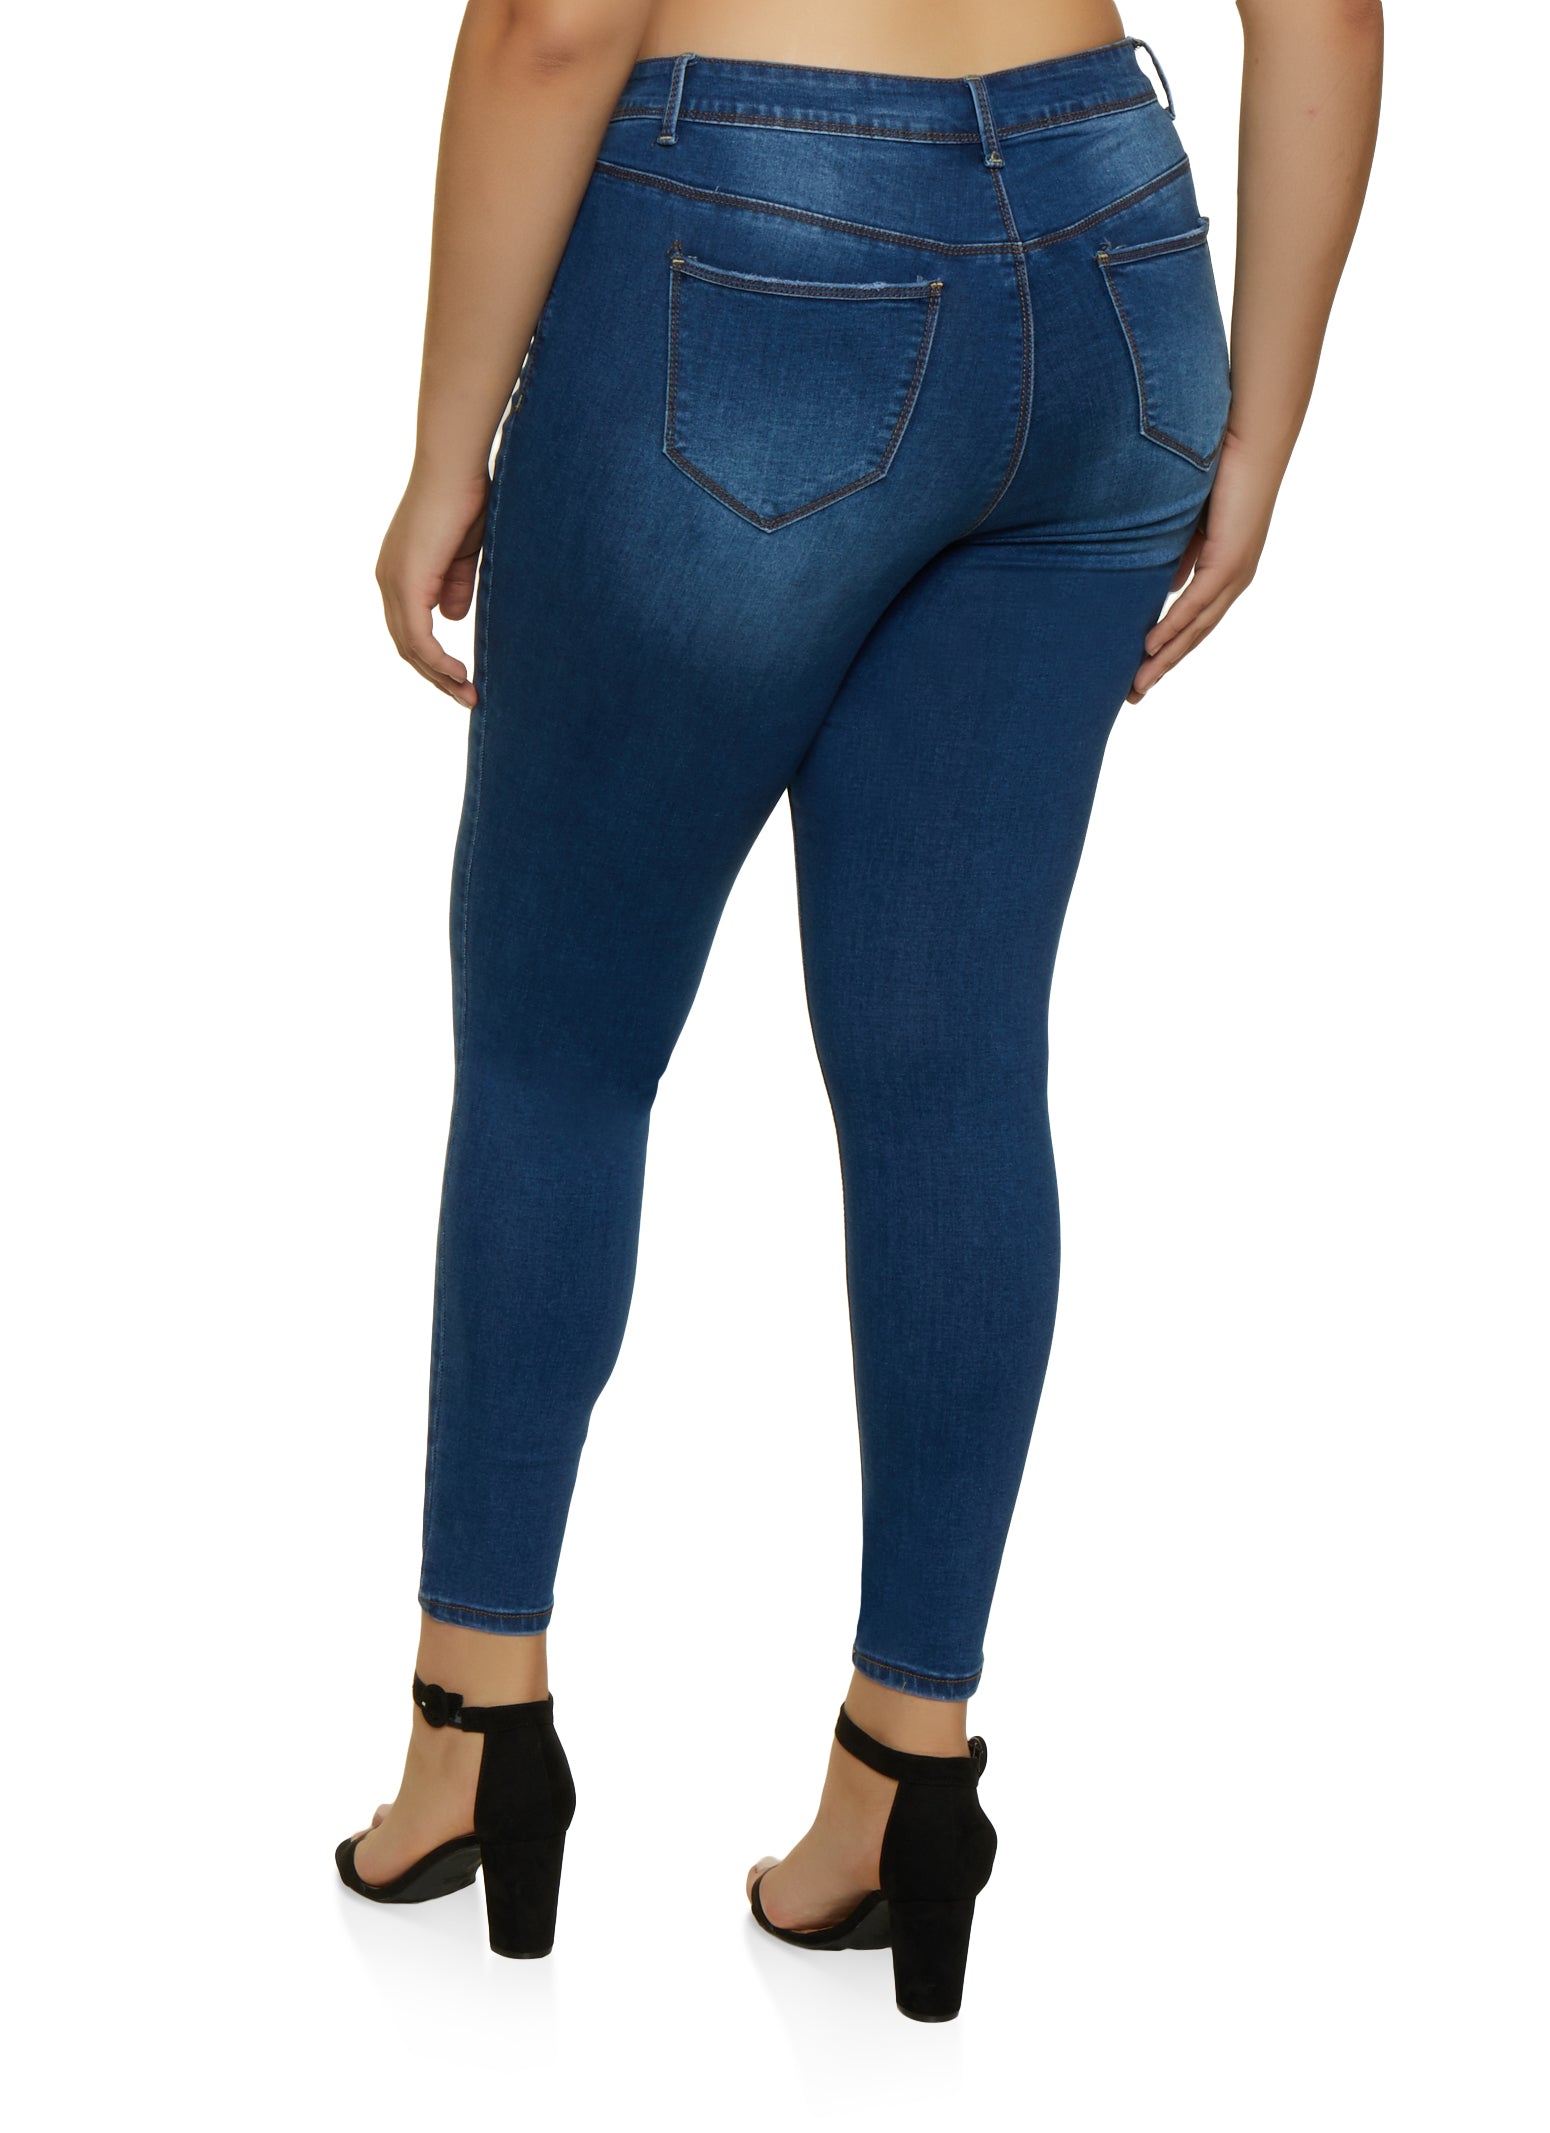 Womens Plus Size WAX Push Up High Waist Jeans, Blue, Size 14